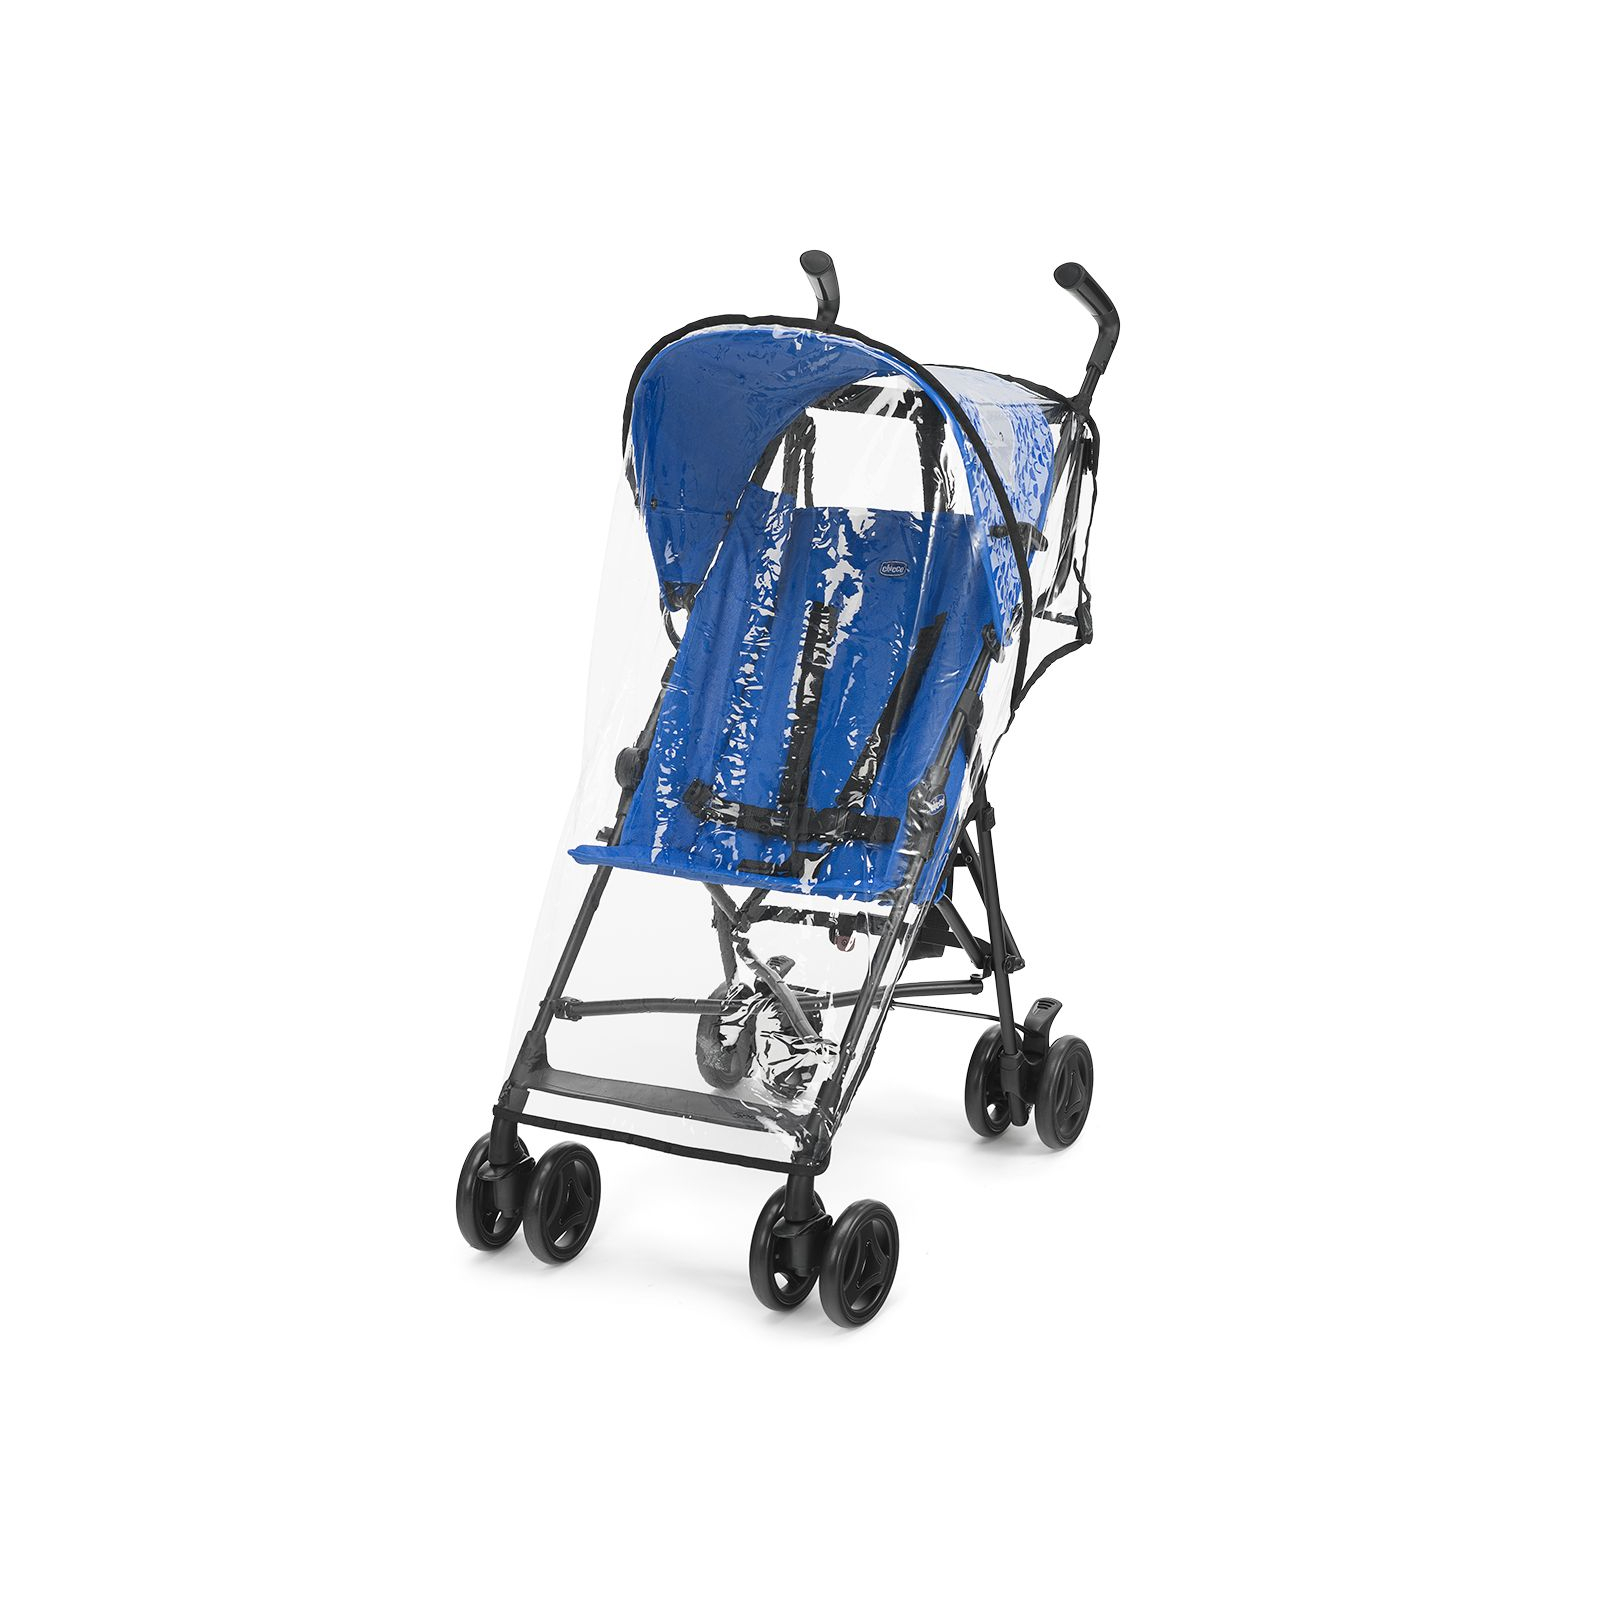 Коляска Chicco Snappy Stroller Blue (79558.35) зображення 5